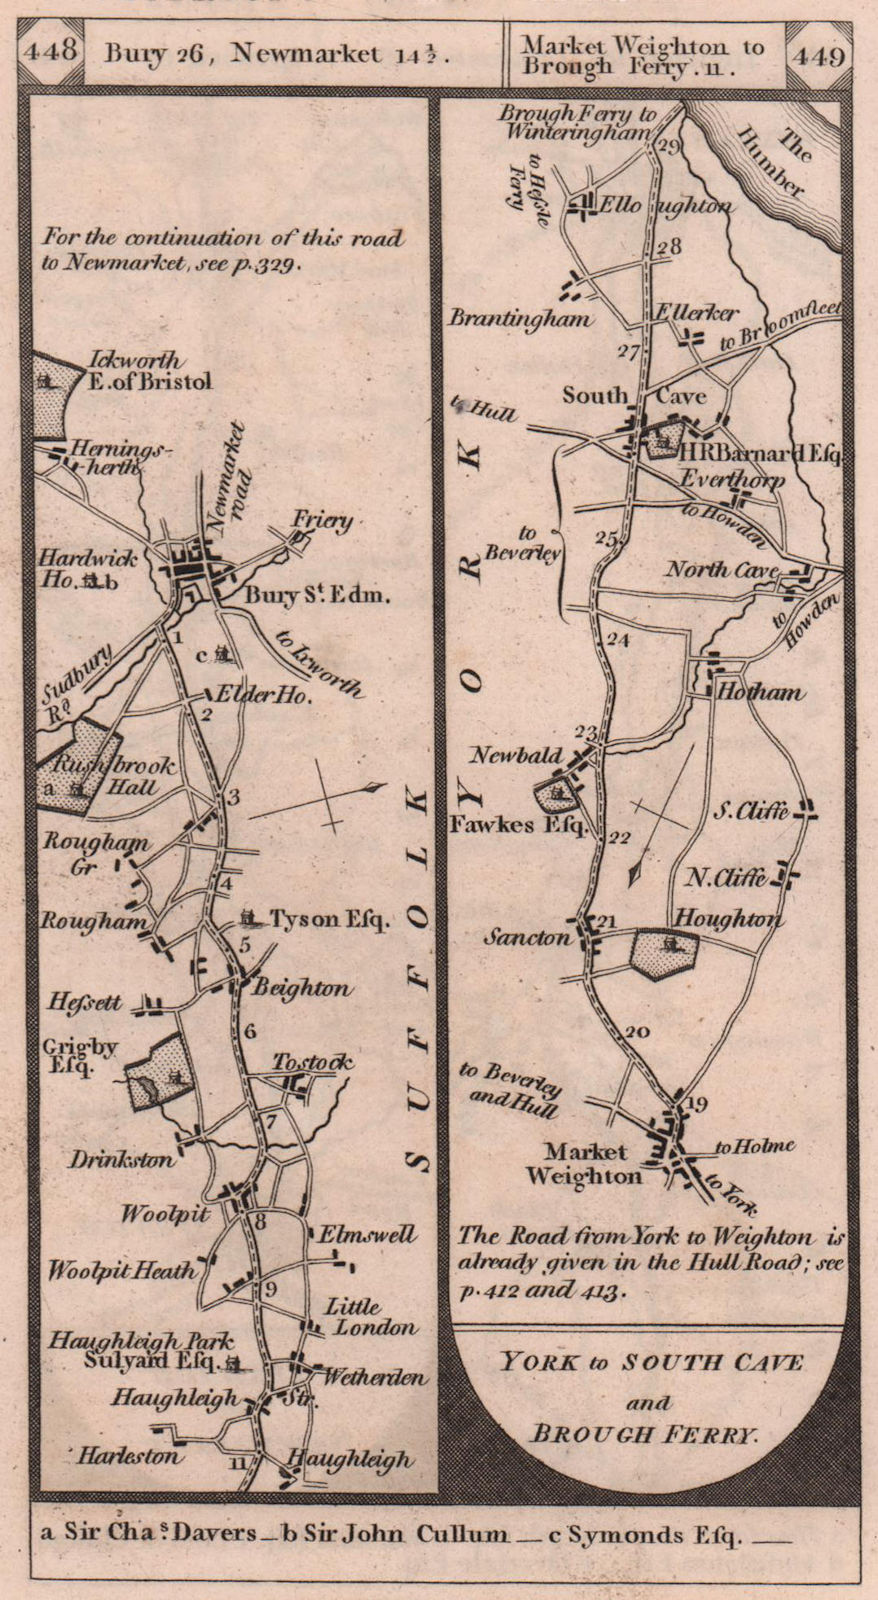 Associate Product Bury St. Edmunds. Market Weighton-Brough Ferry road strip map PATERSON 1803